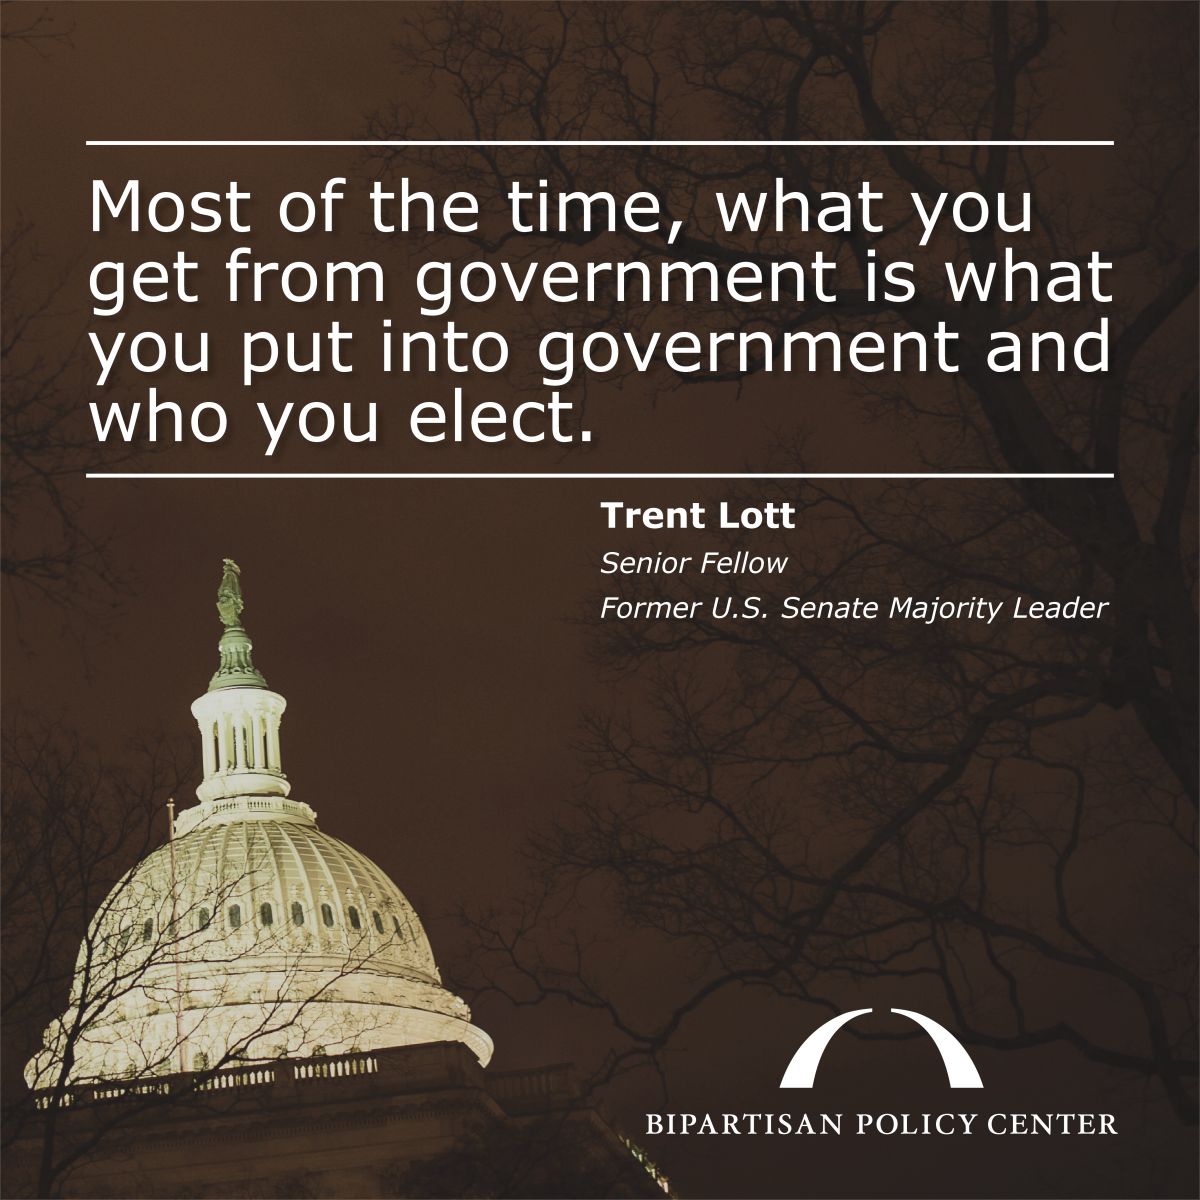 Trent Lott on government